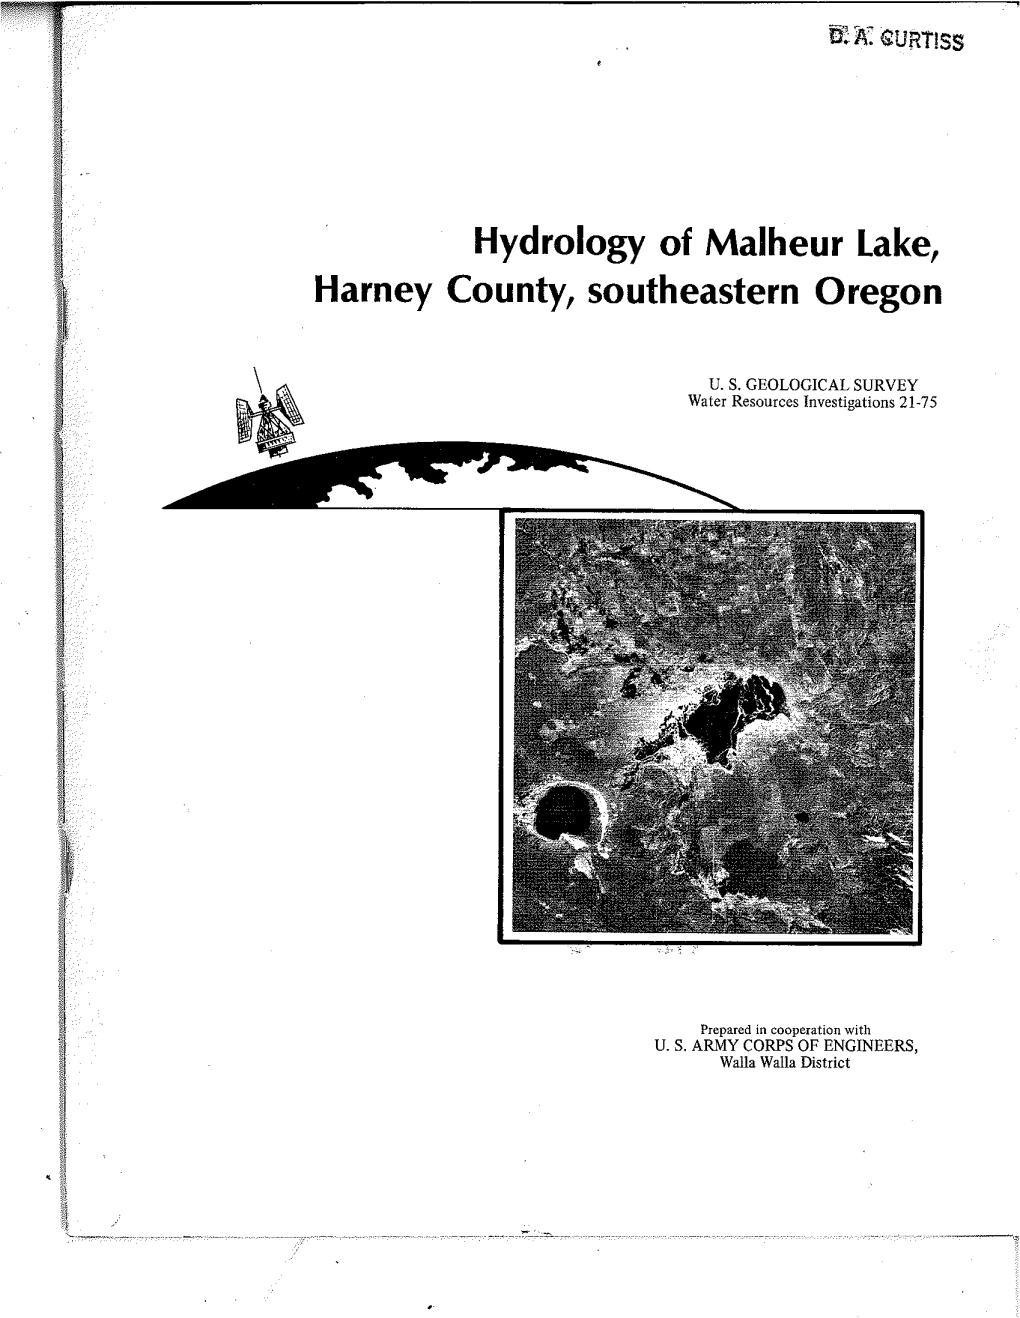 Hydrology of Malheur Lake, Harney County, Southeastern Oregon